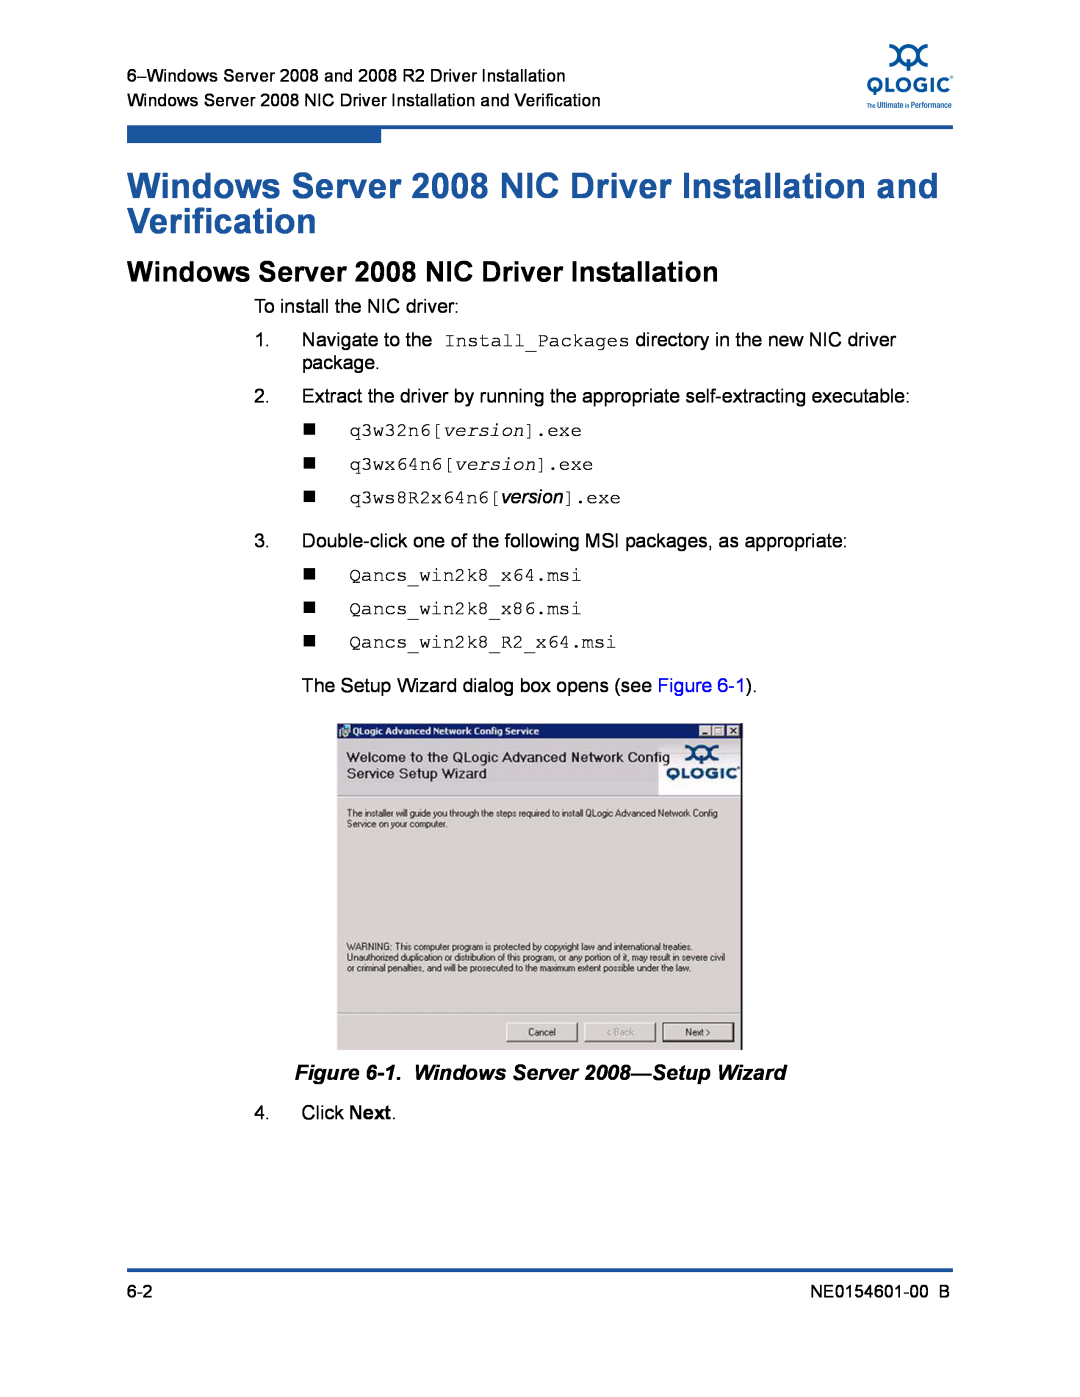 Q-Logic 3100, 3000 manual Windows Server 2008 NIC Driver Installation and Verification, 1. Windows Server 2008-Setup Wizard 